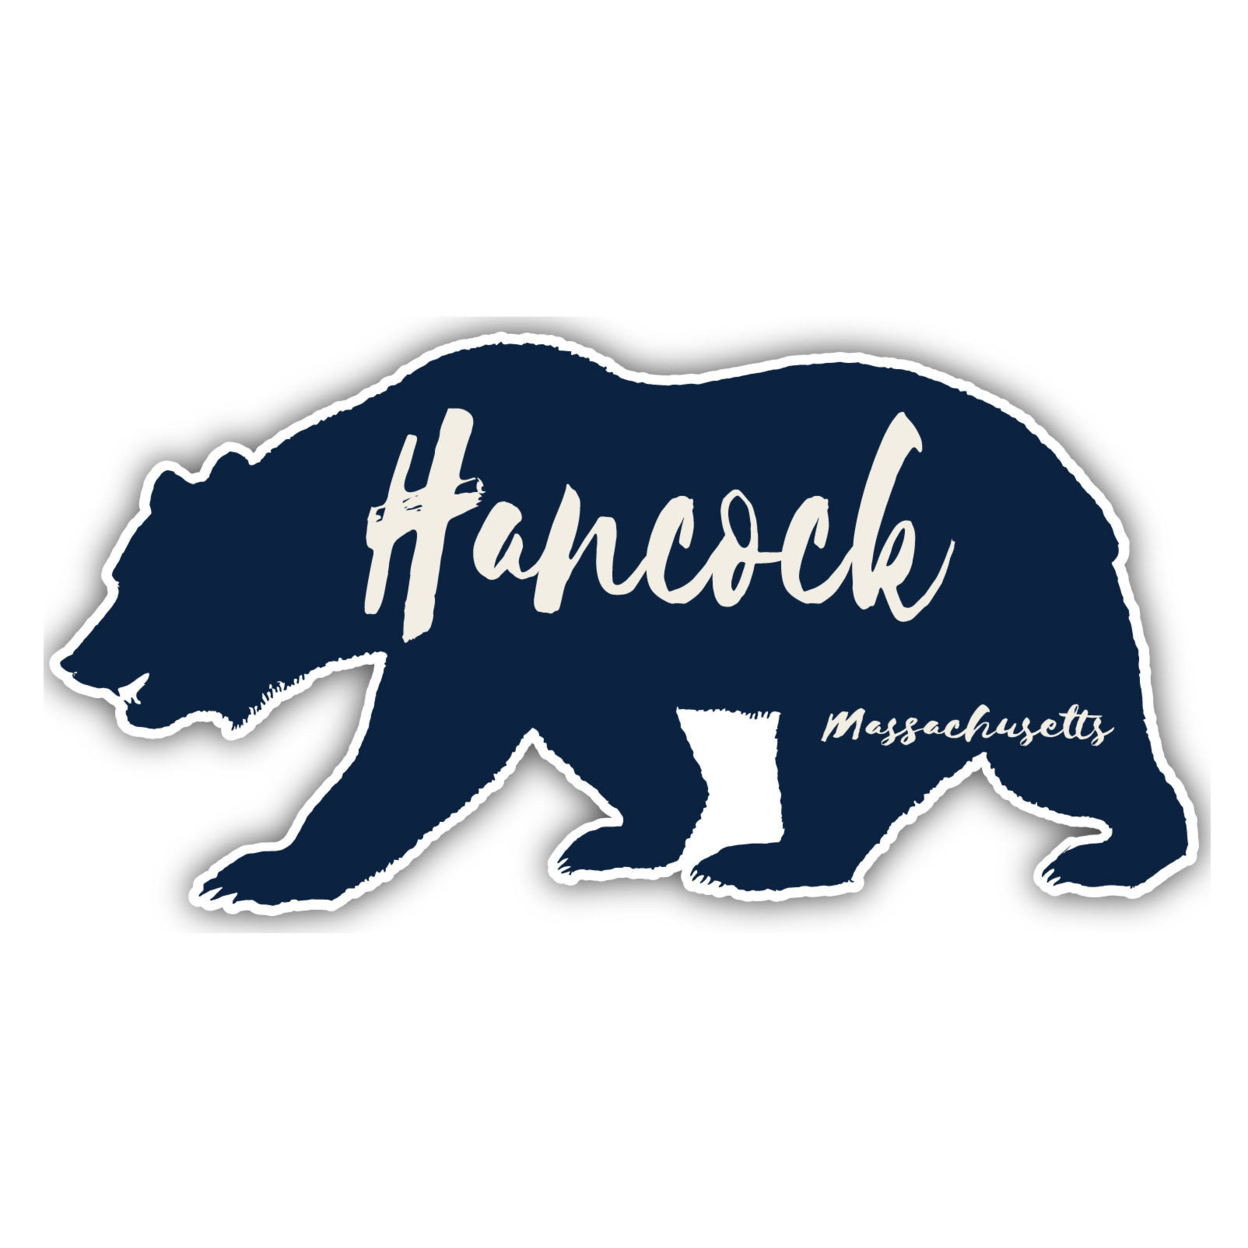 Hancock Massachusetts Souvenir Decorative Stickers (Choose Theme And Size) - 4-Pack, 12-Inch, Tent